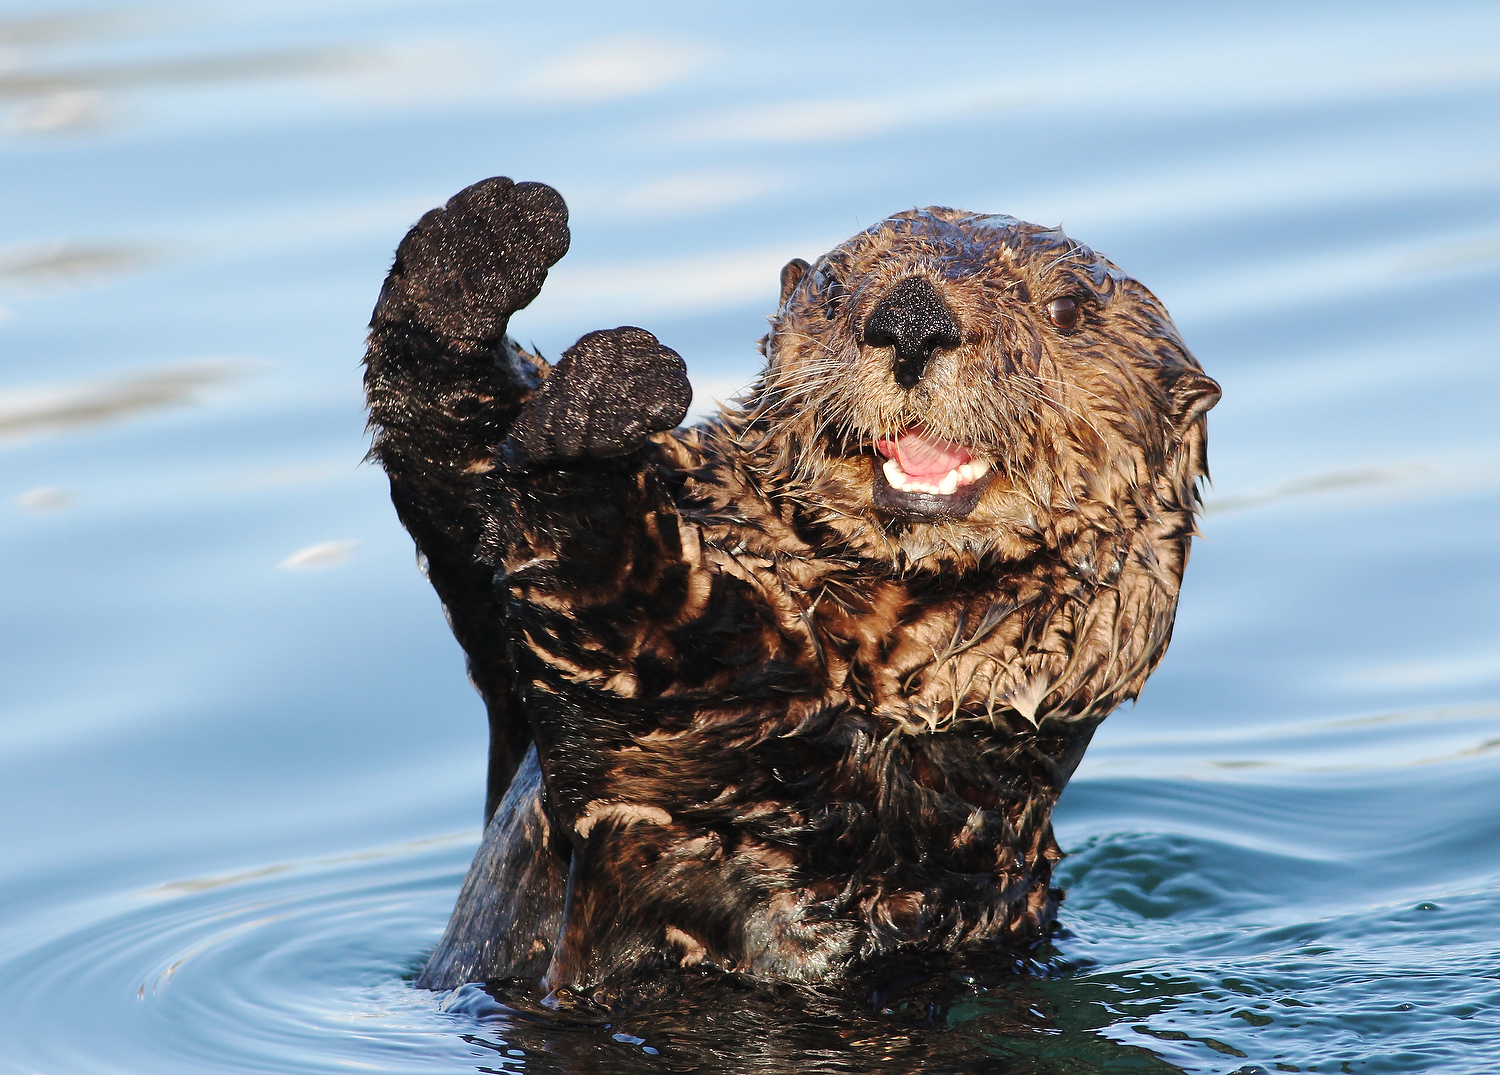 Let's celebrate Sea Otter Awareness Week